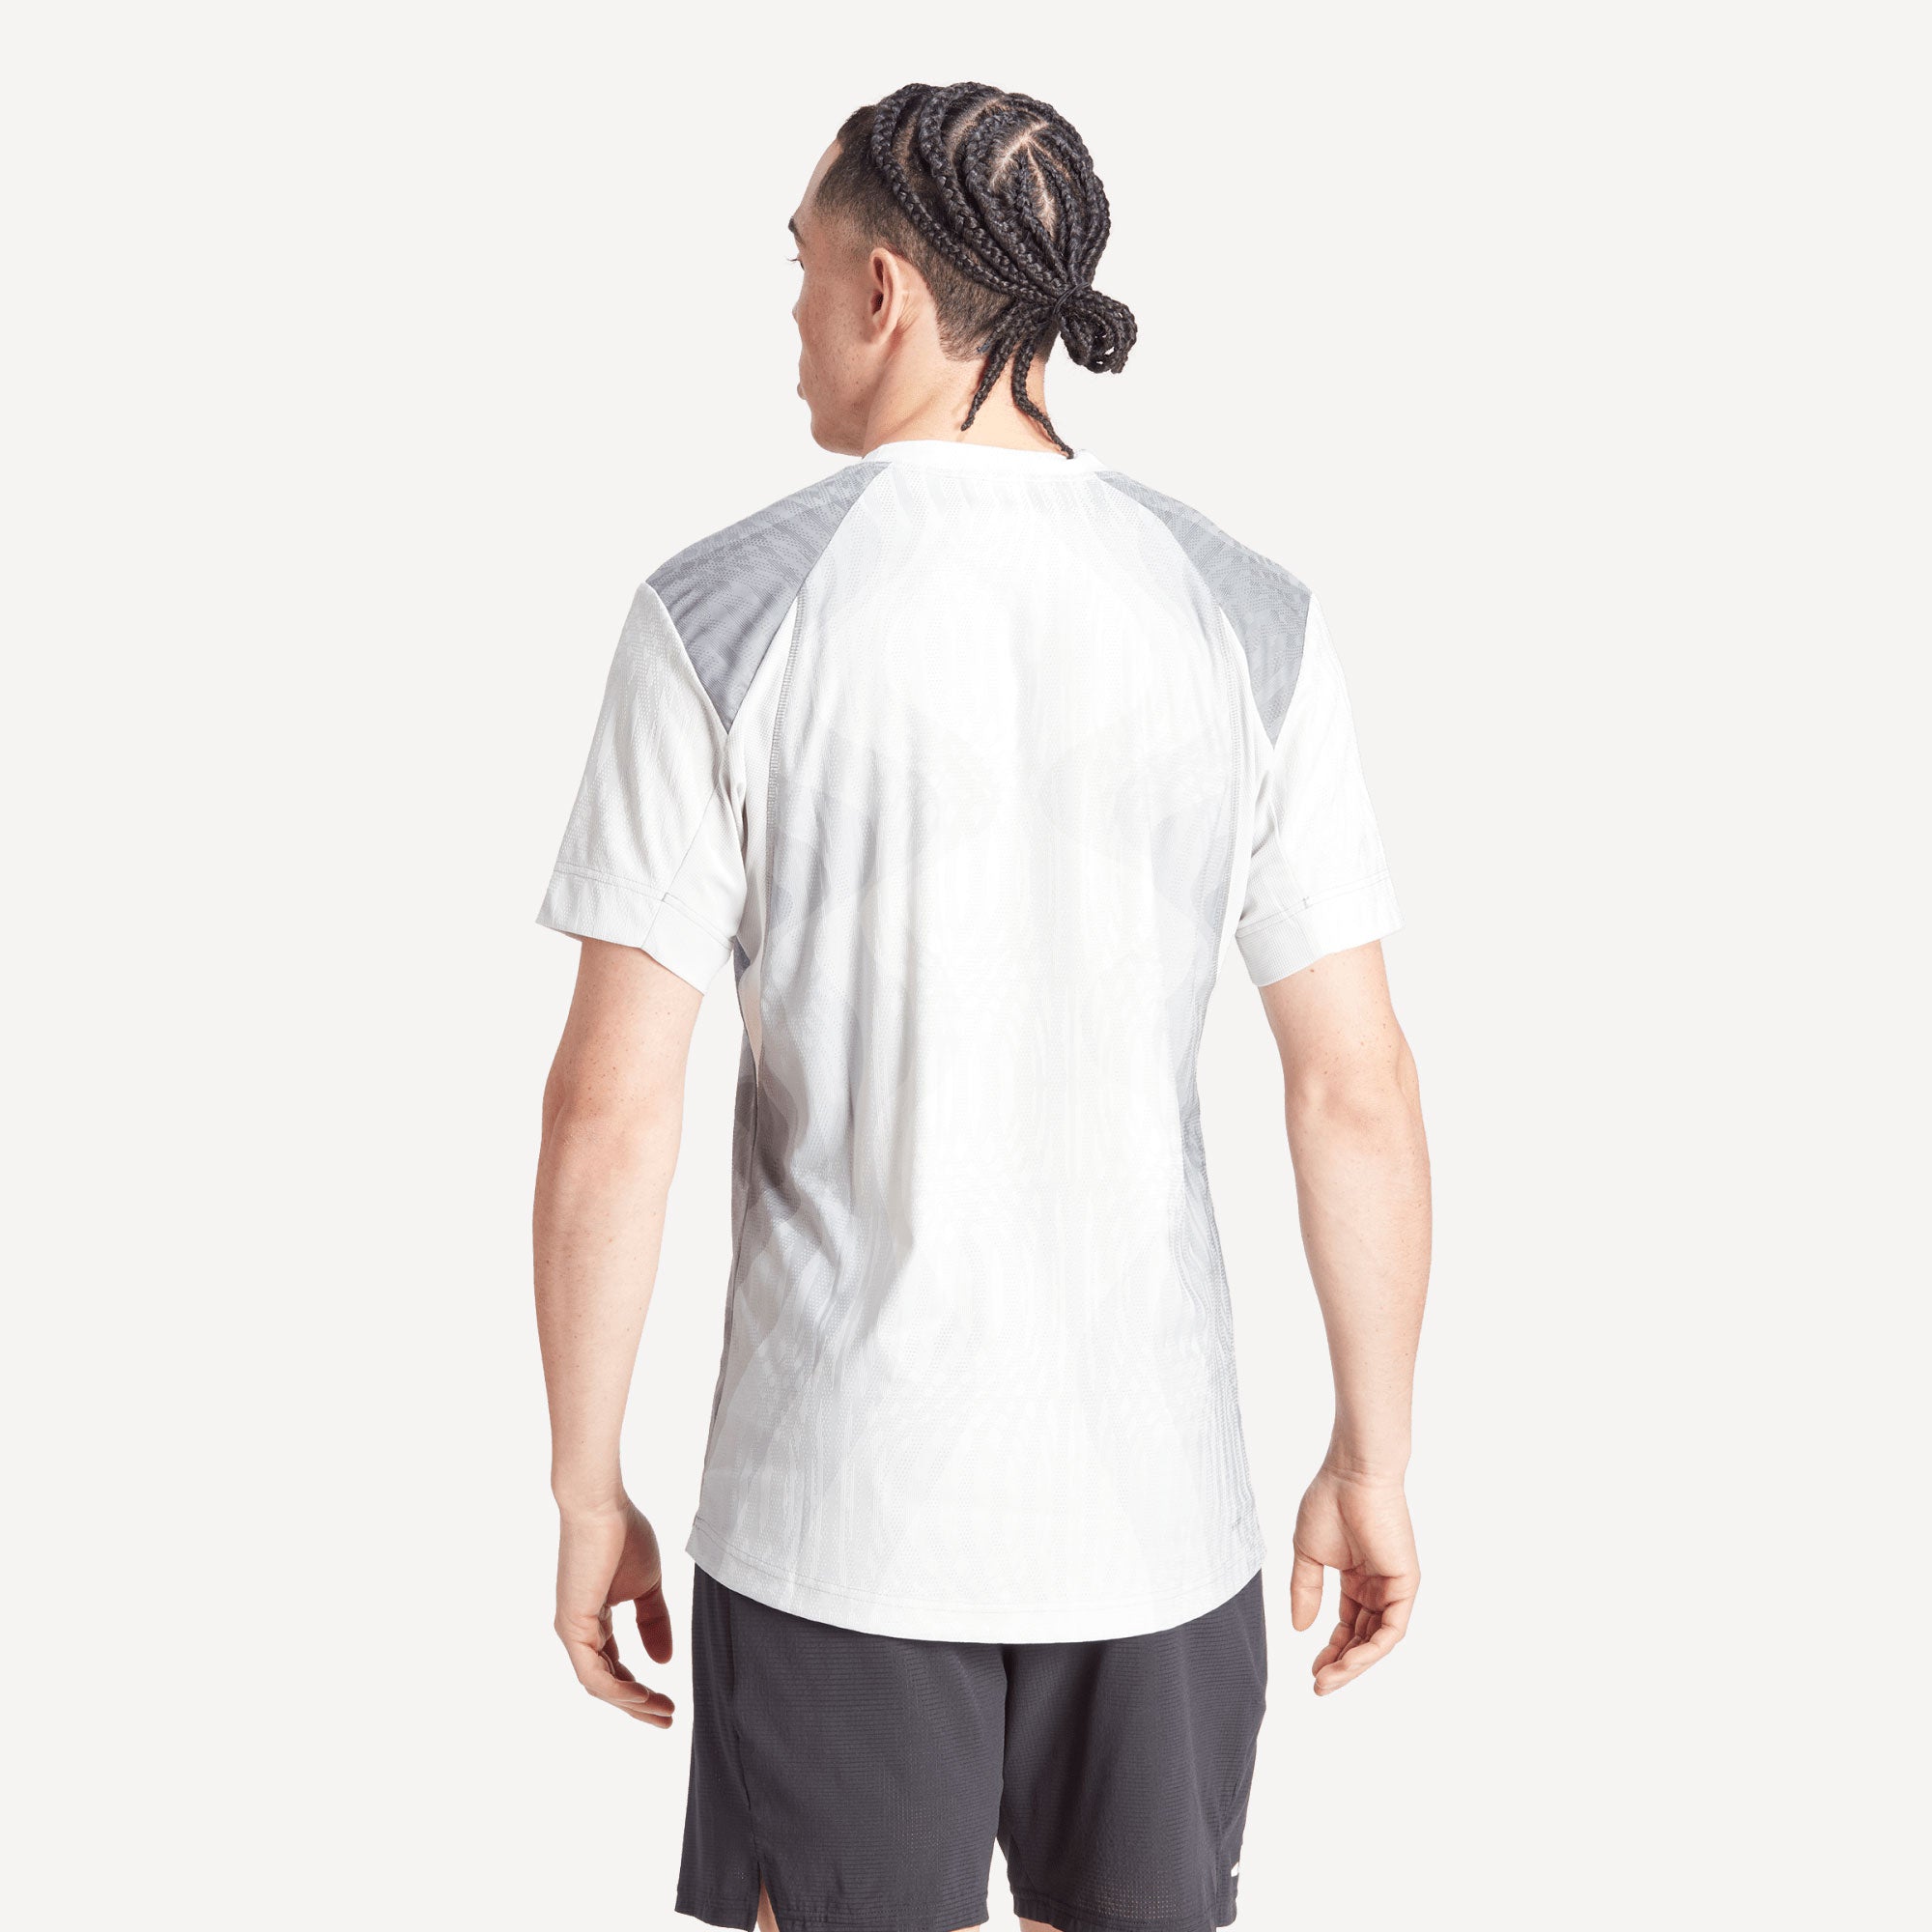 adidas Pro Melbourne Men's Tennis Shirt - Grey (2)